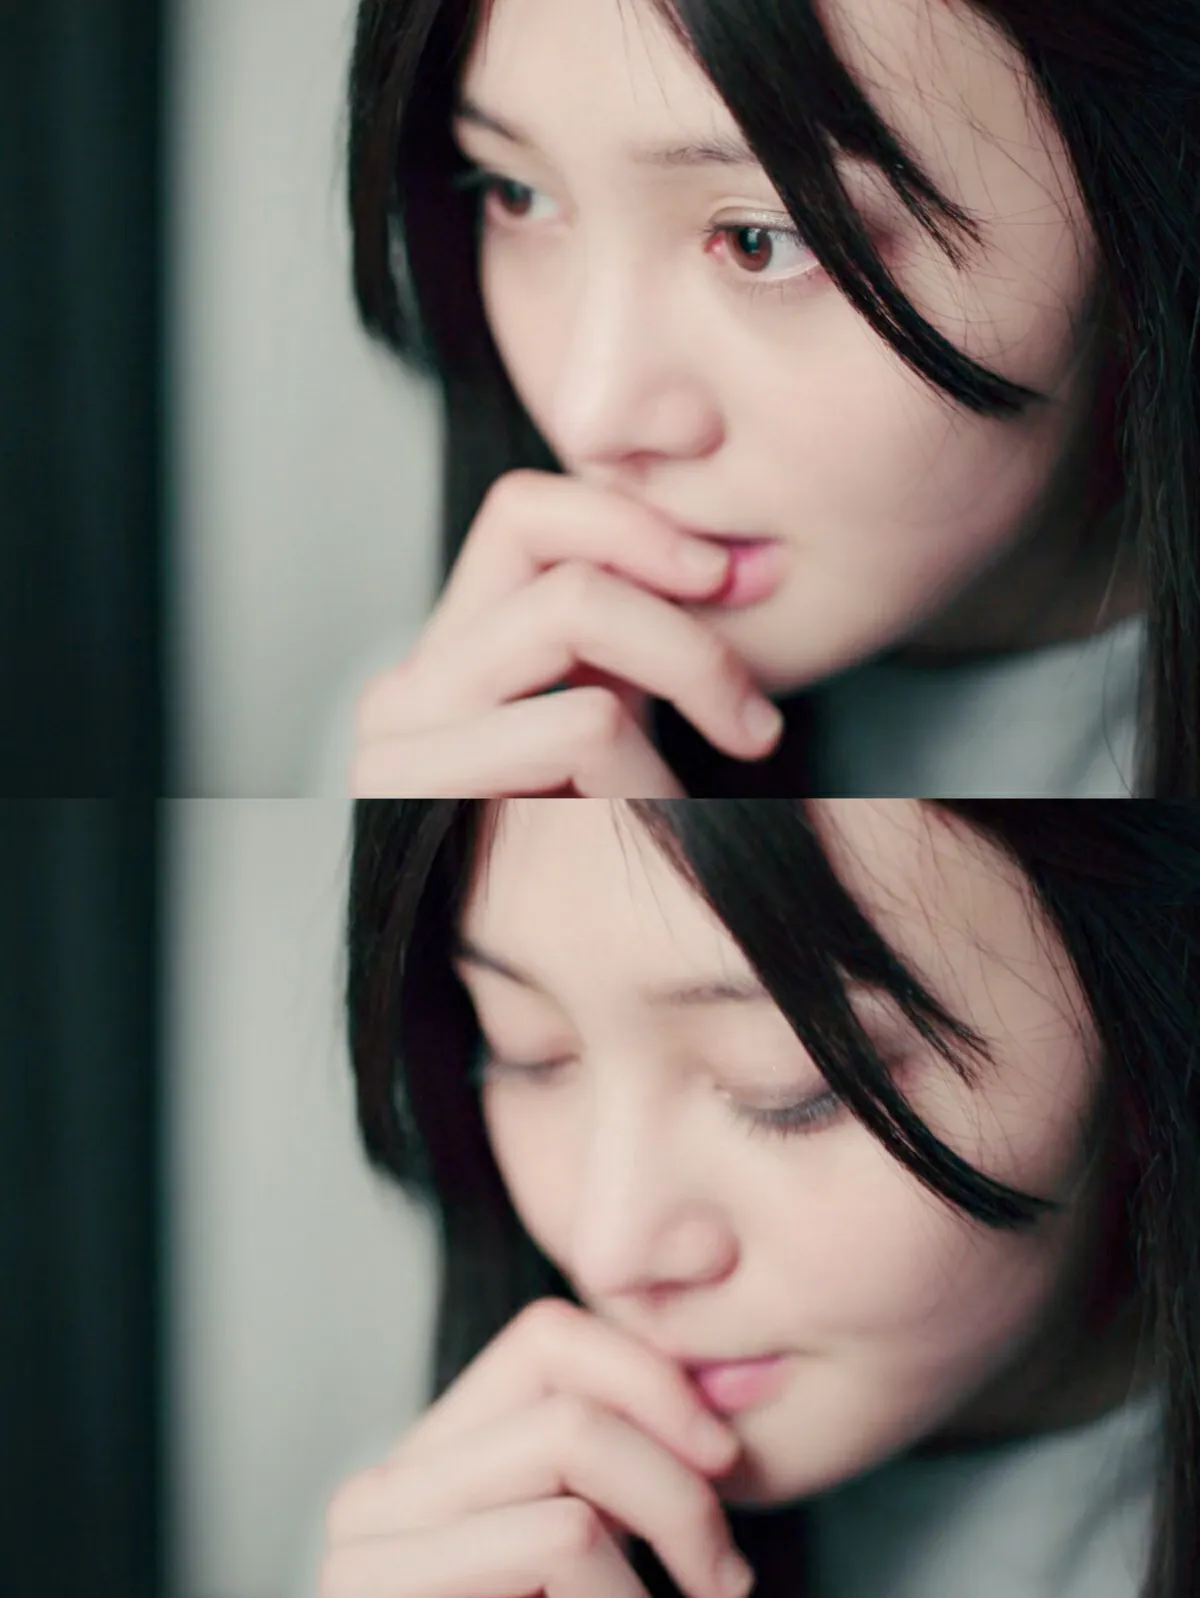  Zheng Shuang (actress, born 1991) 戏份被删主角变酱油4.jpg